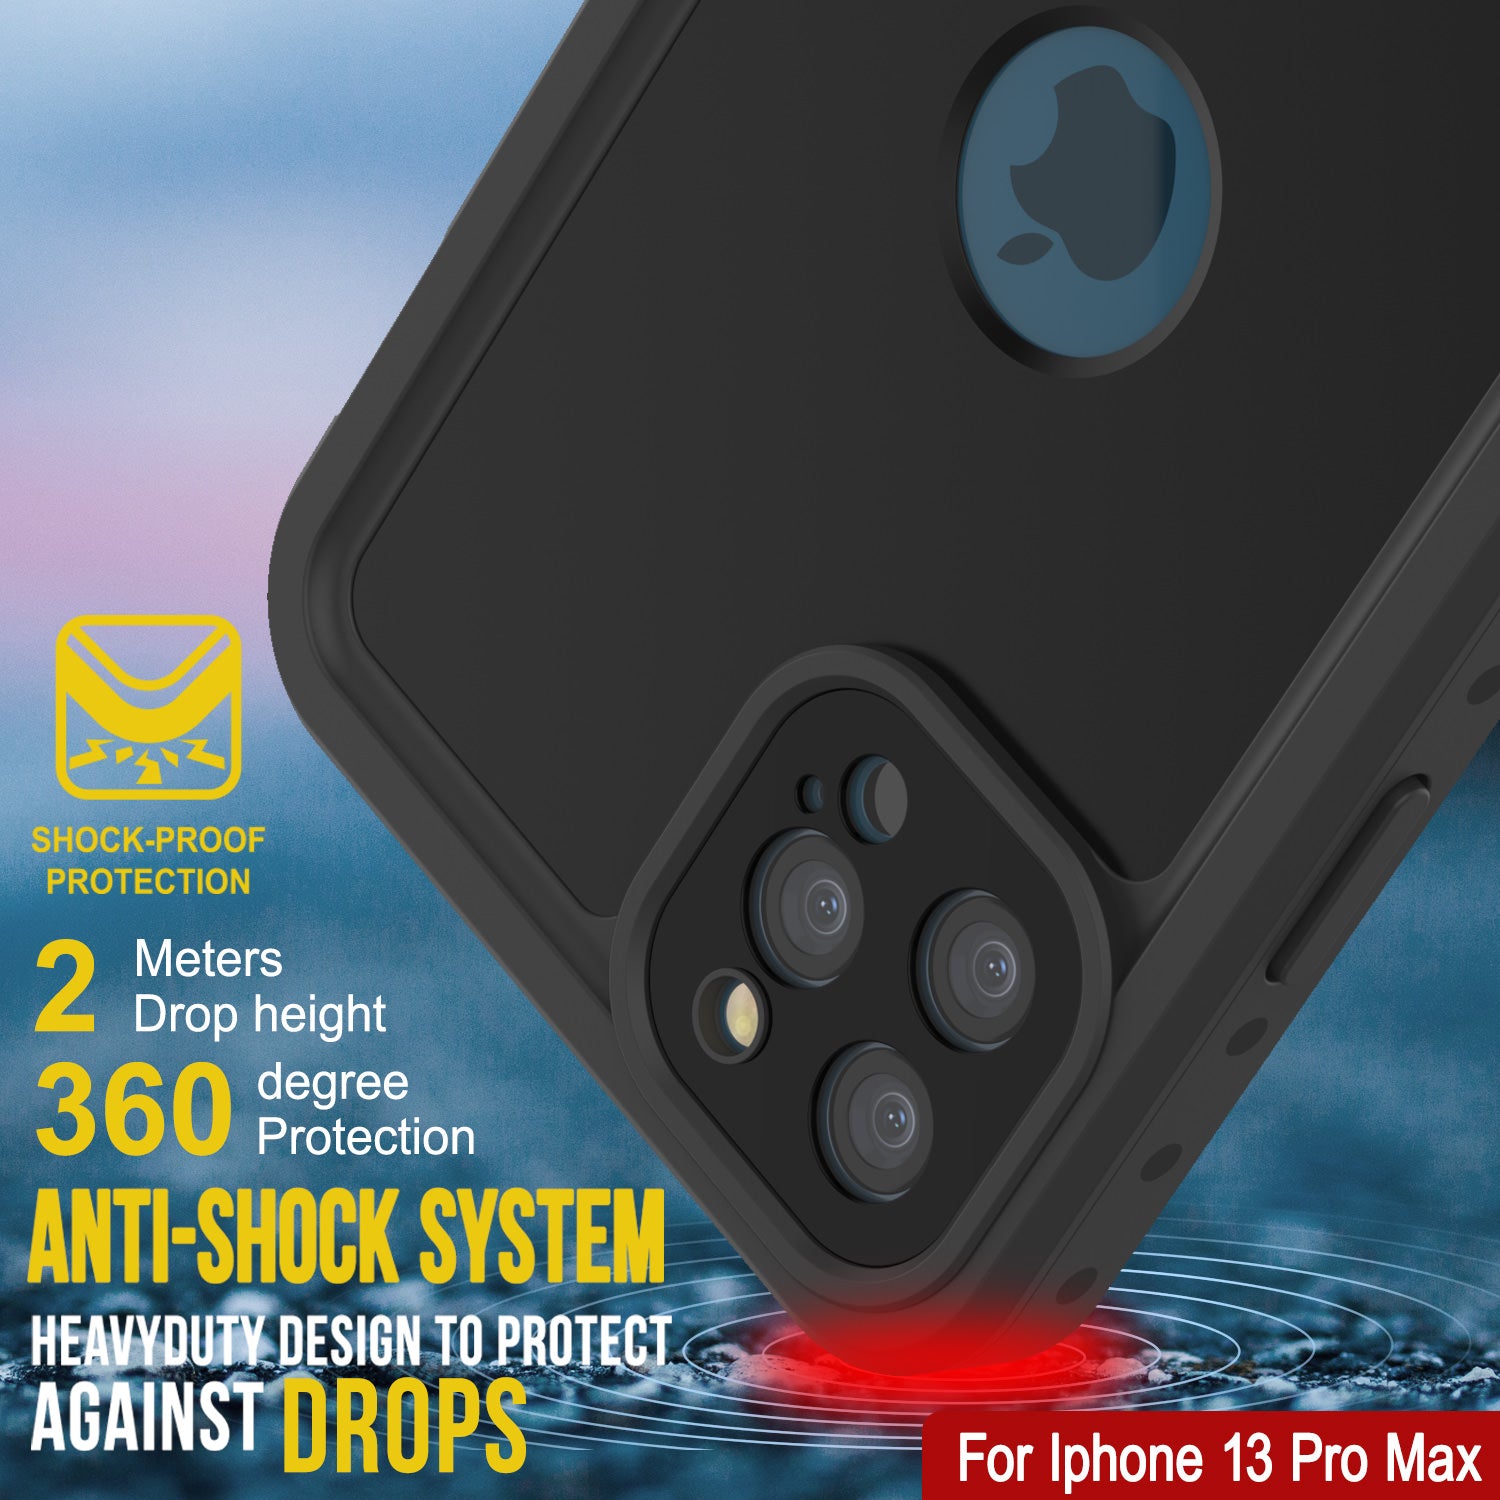 Punkcase iPhone 7 Case - Slim Fit, Waterproof IP 68 Certified – punkcase